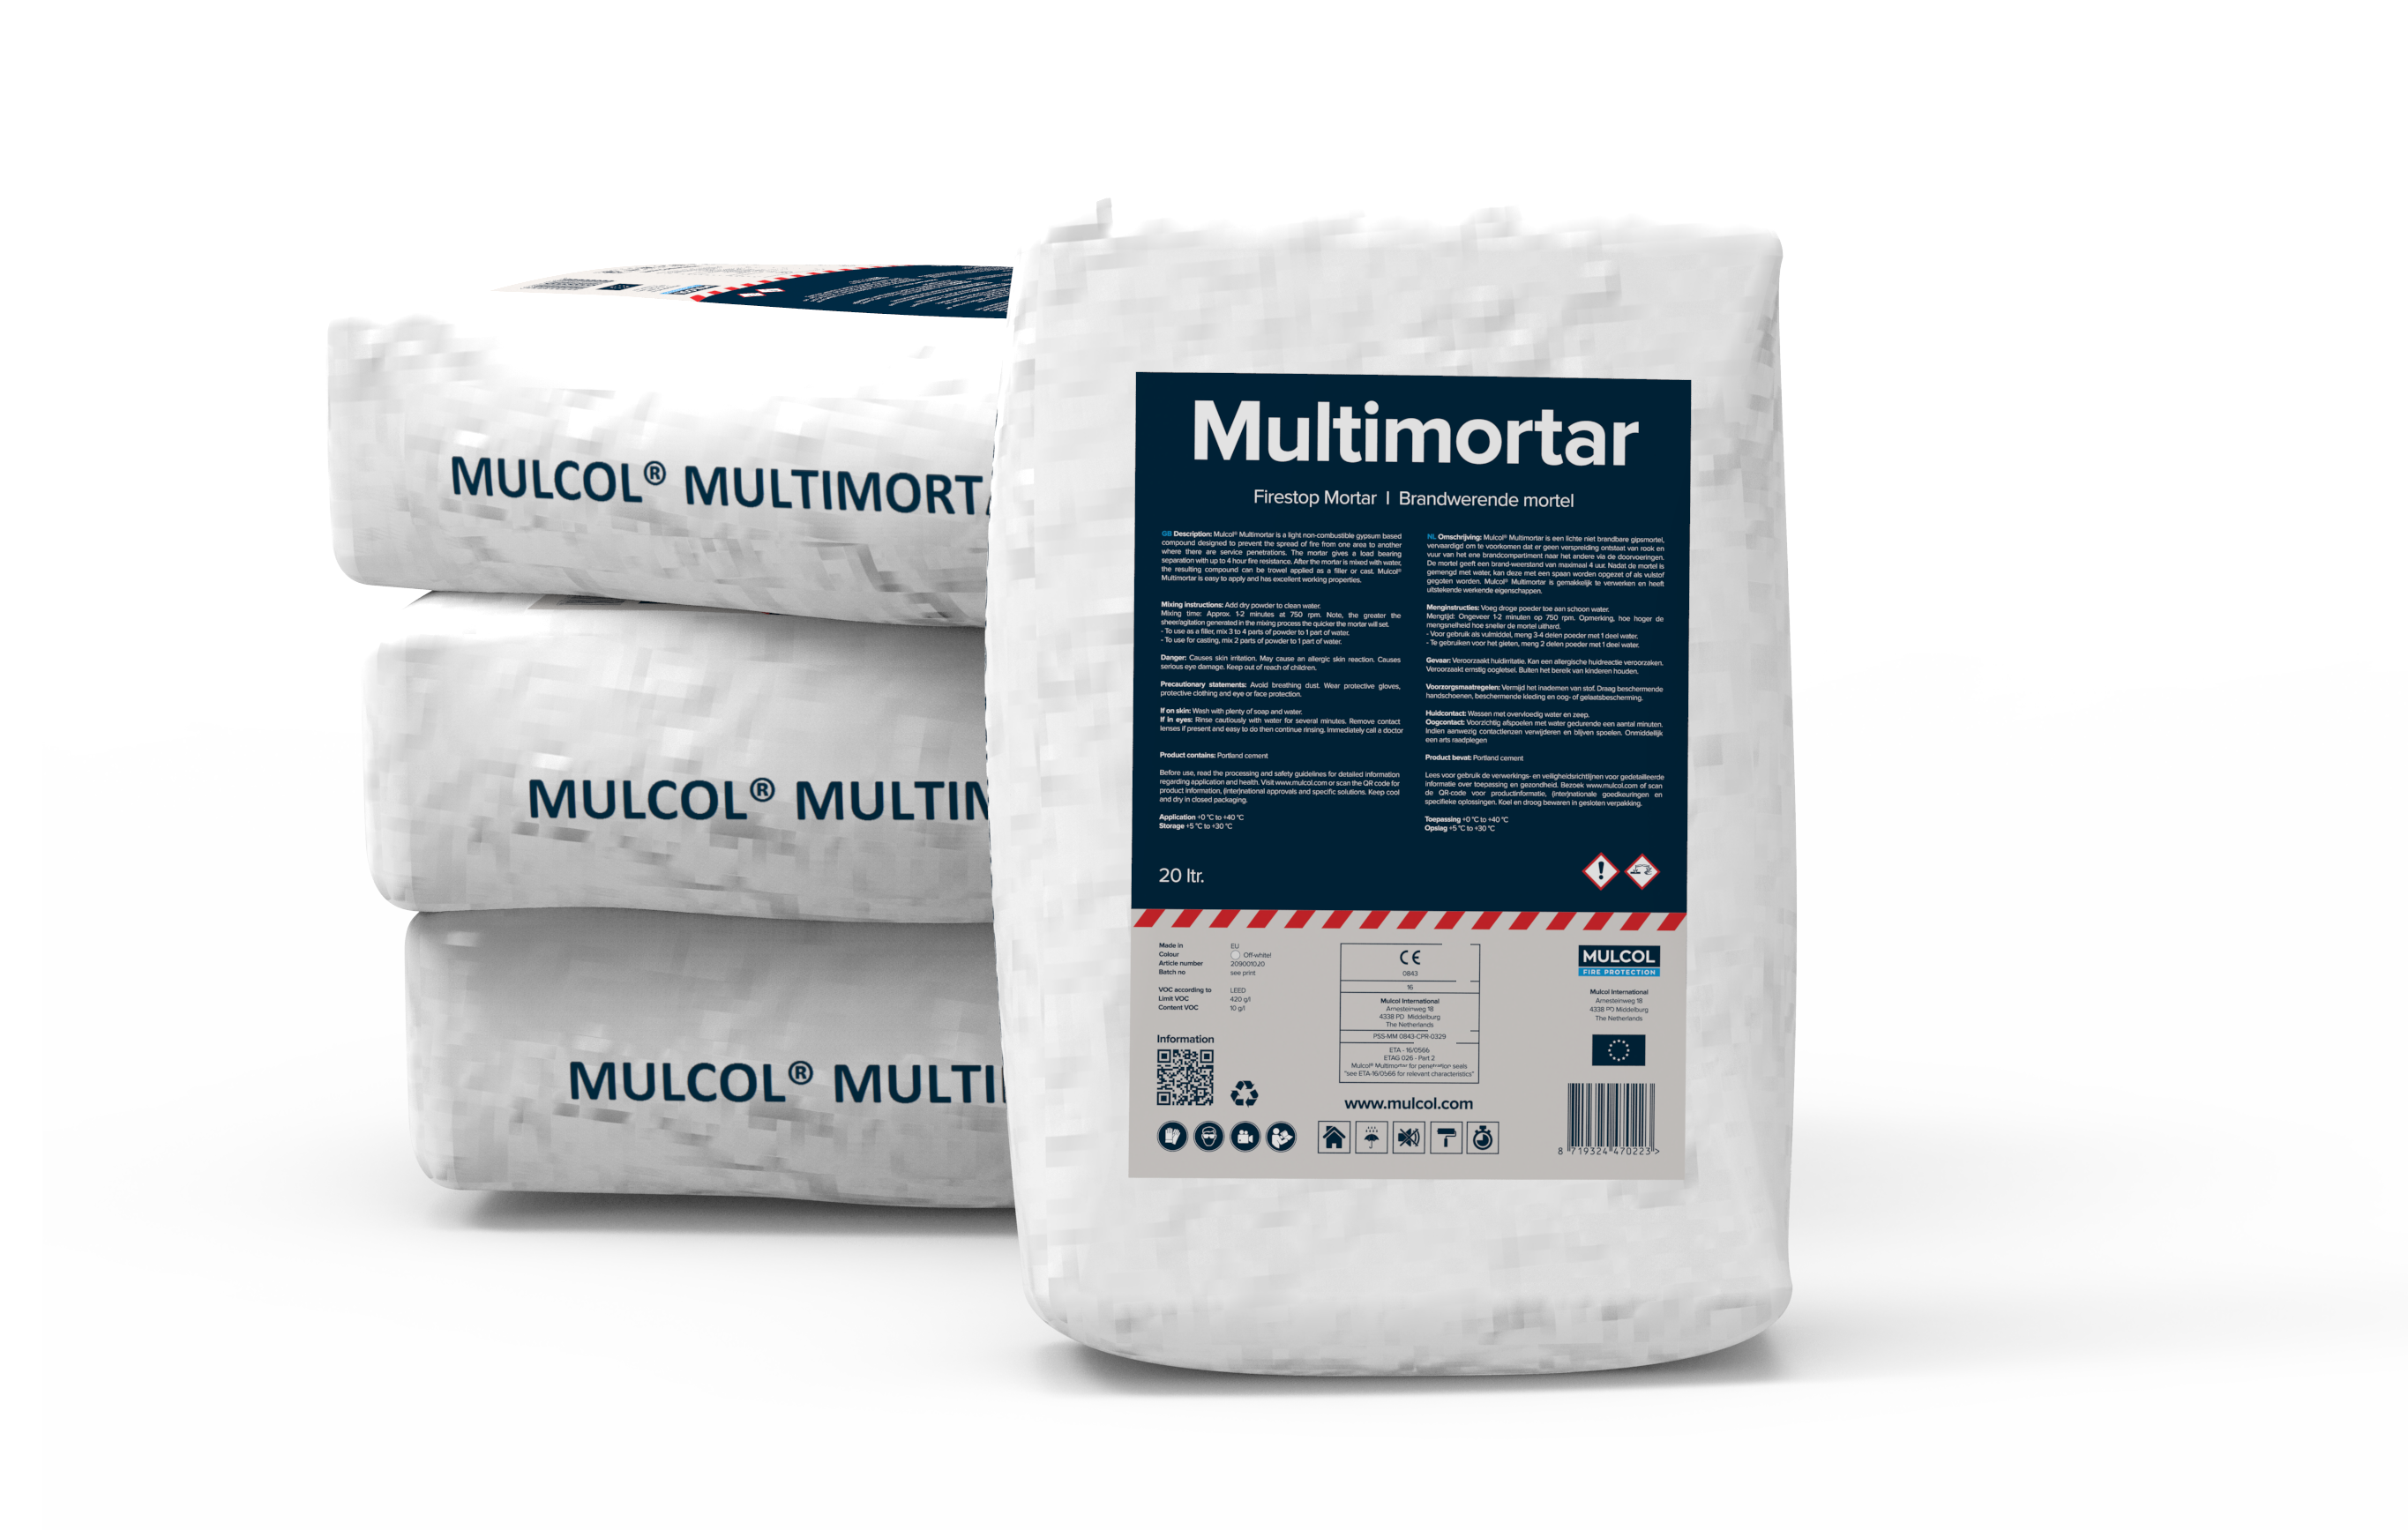 Mulcol® Multimortar 20Liter Påse